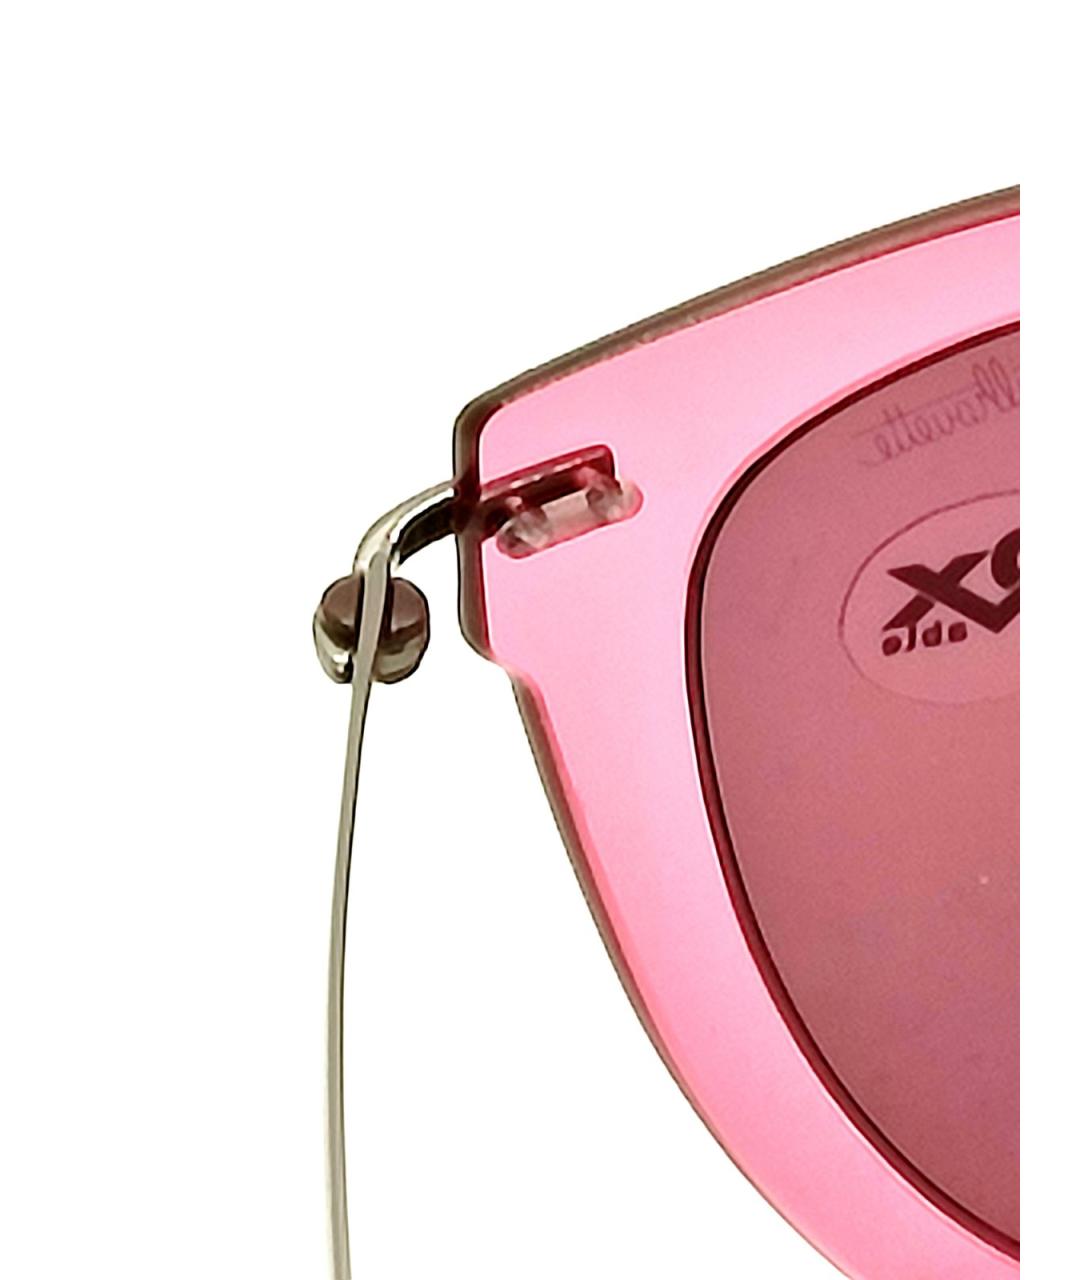 SILHOUETTE Розовые металлические солнцезащитные очки, фото 2